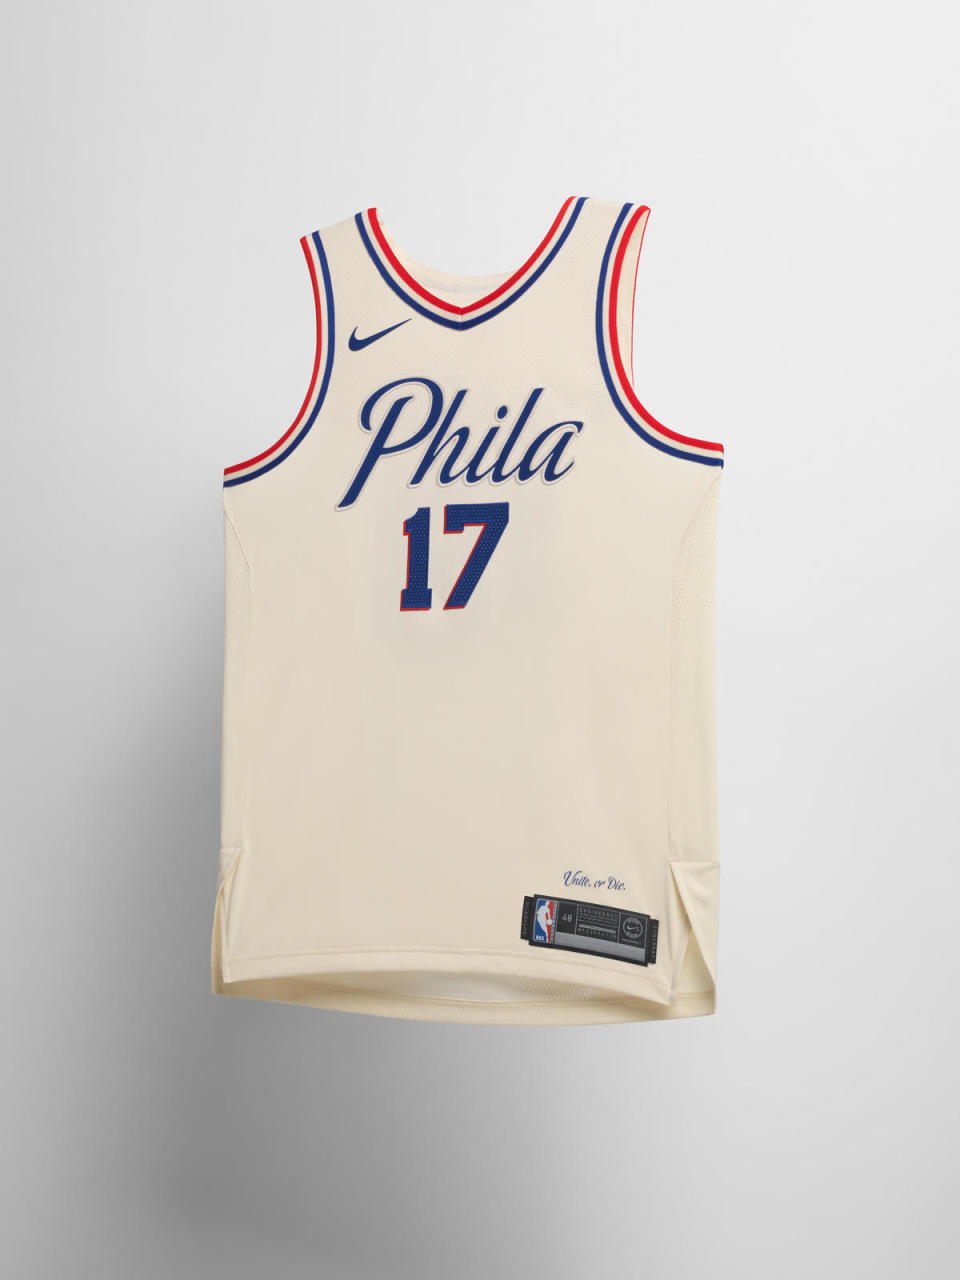 Philadelphia Sixers City uniform. (Nike)